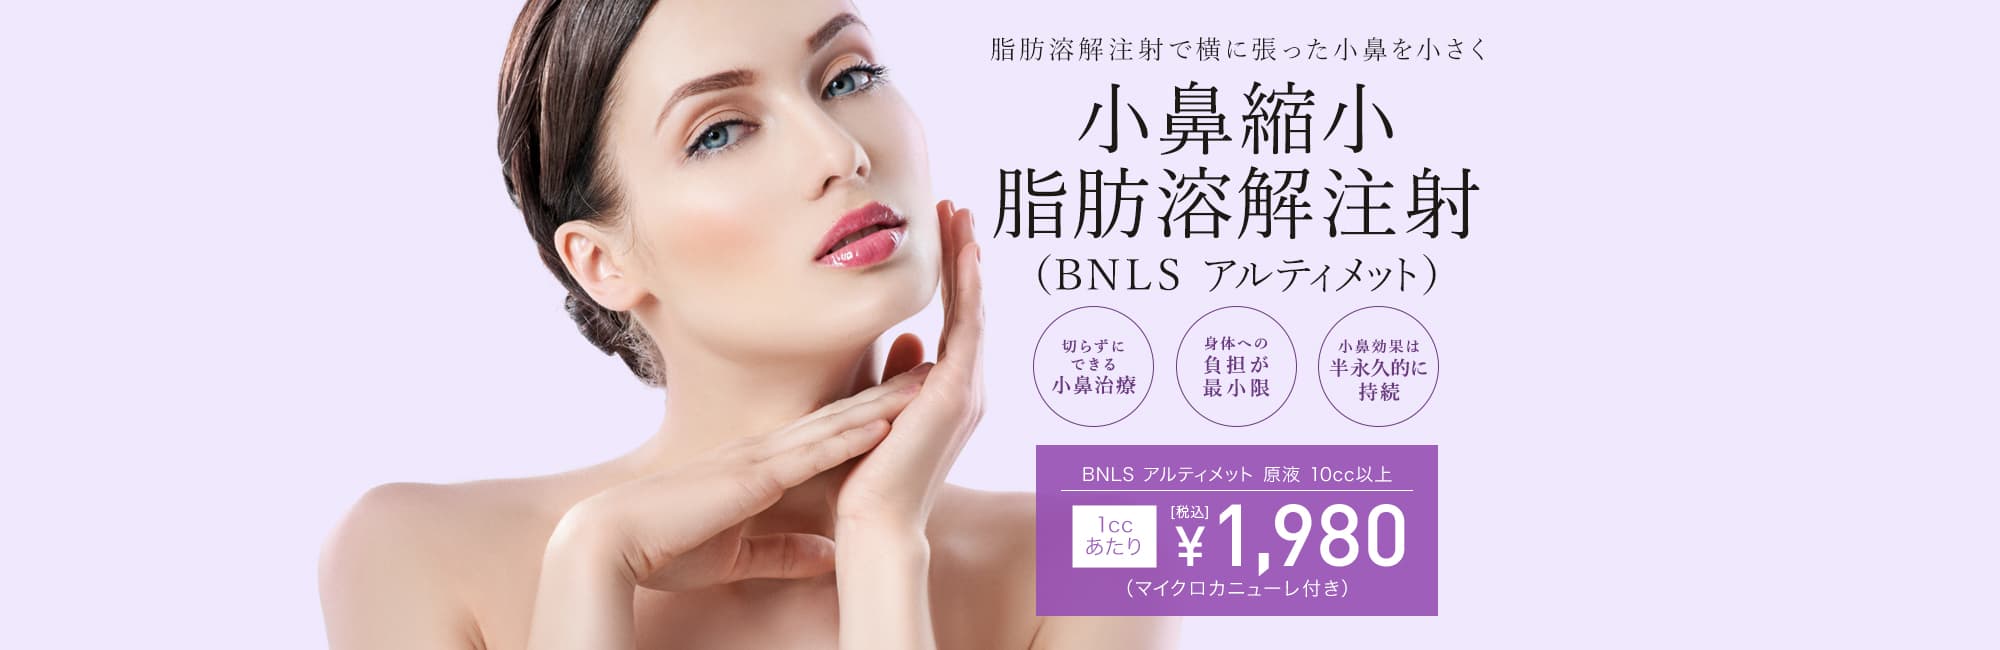 TCB東京中央美容外科 小鼻縮小脂肪溶解注射(BNLS アルティメット)